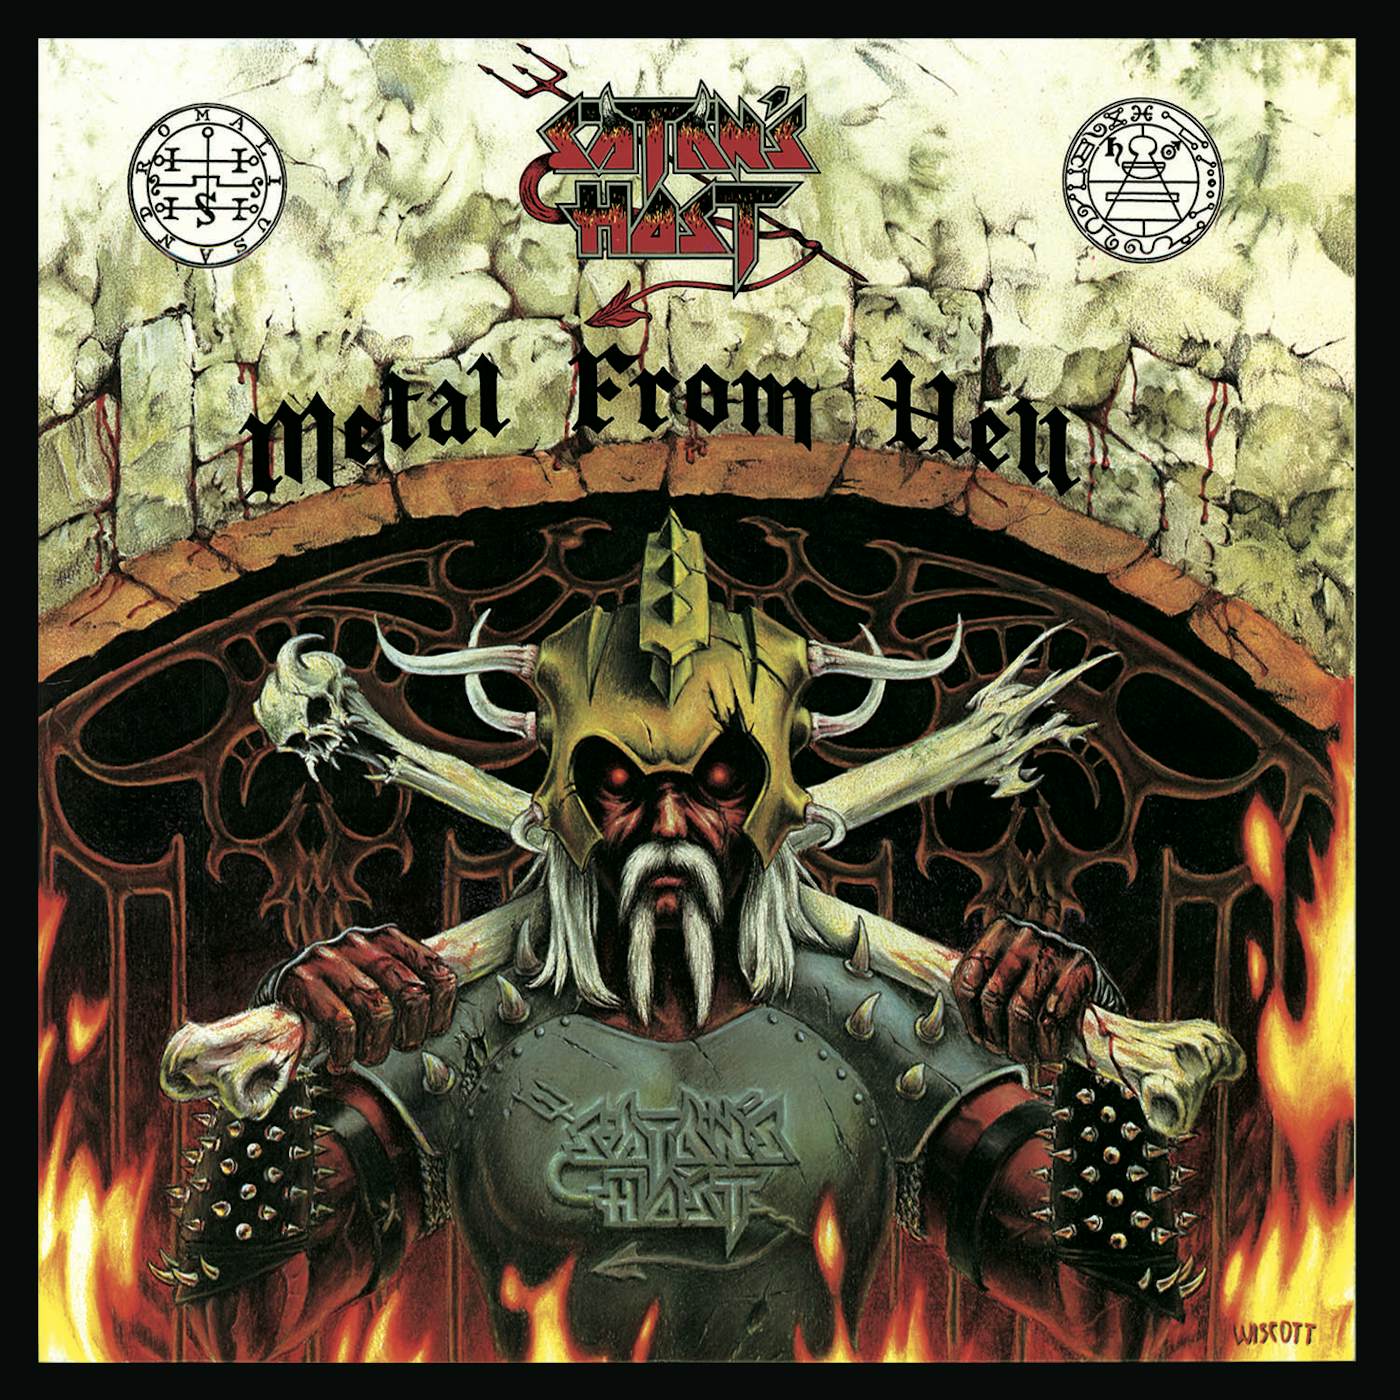 Satan's Host METAL FROM HELL CD